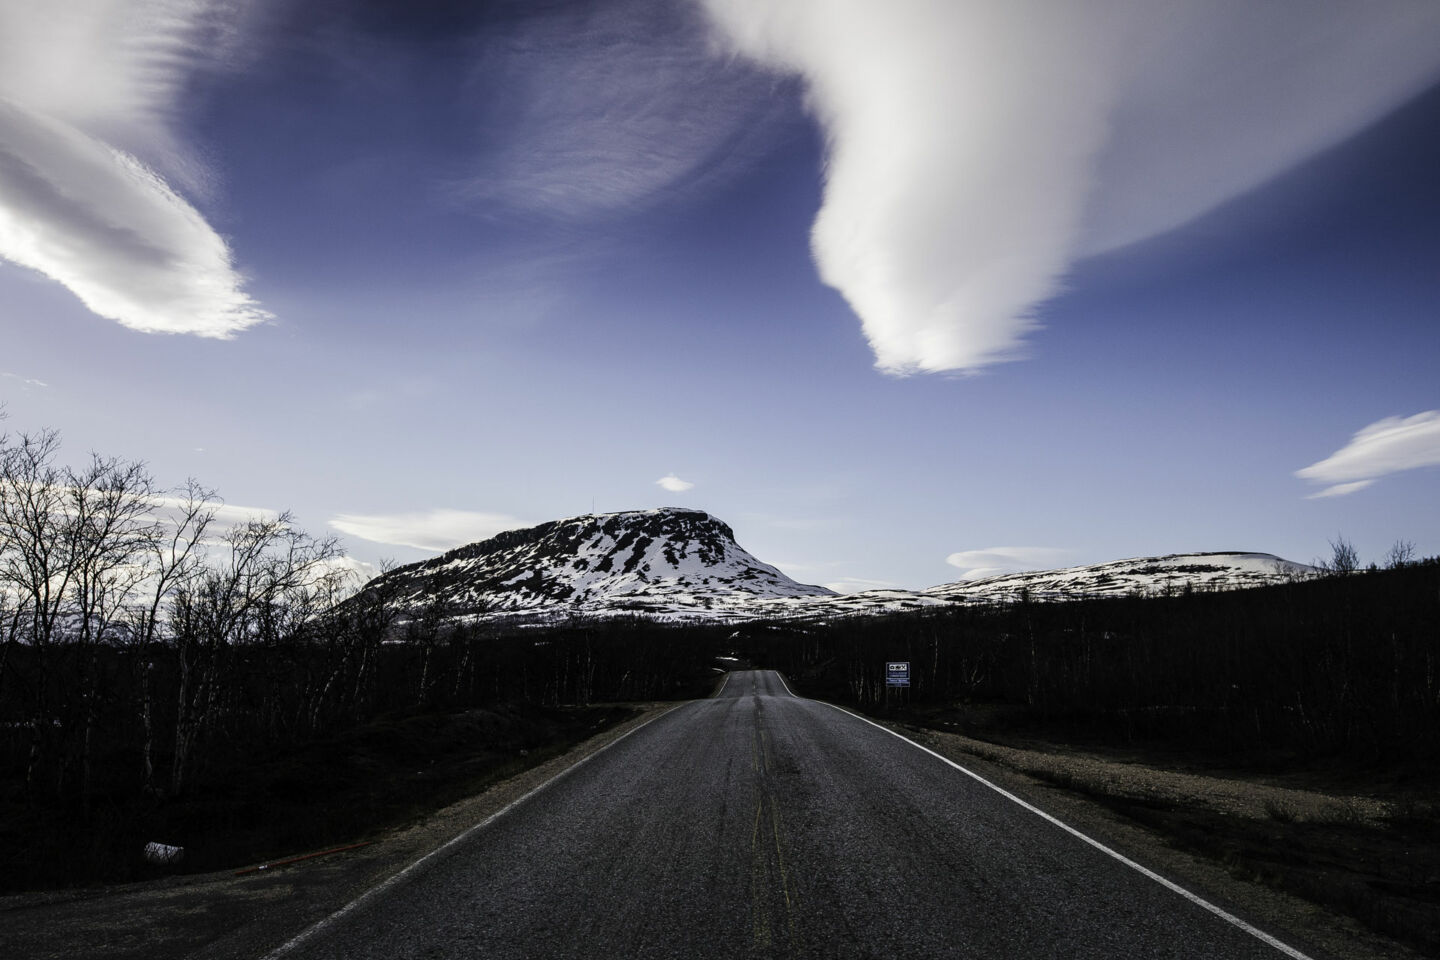 The road to Mt. Saana, an Arctic fell in Kilpisjärvi, a Finnish Lapland filming location